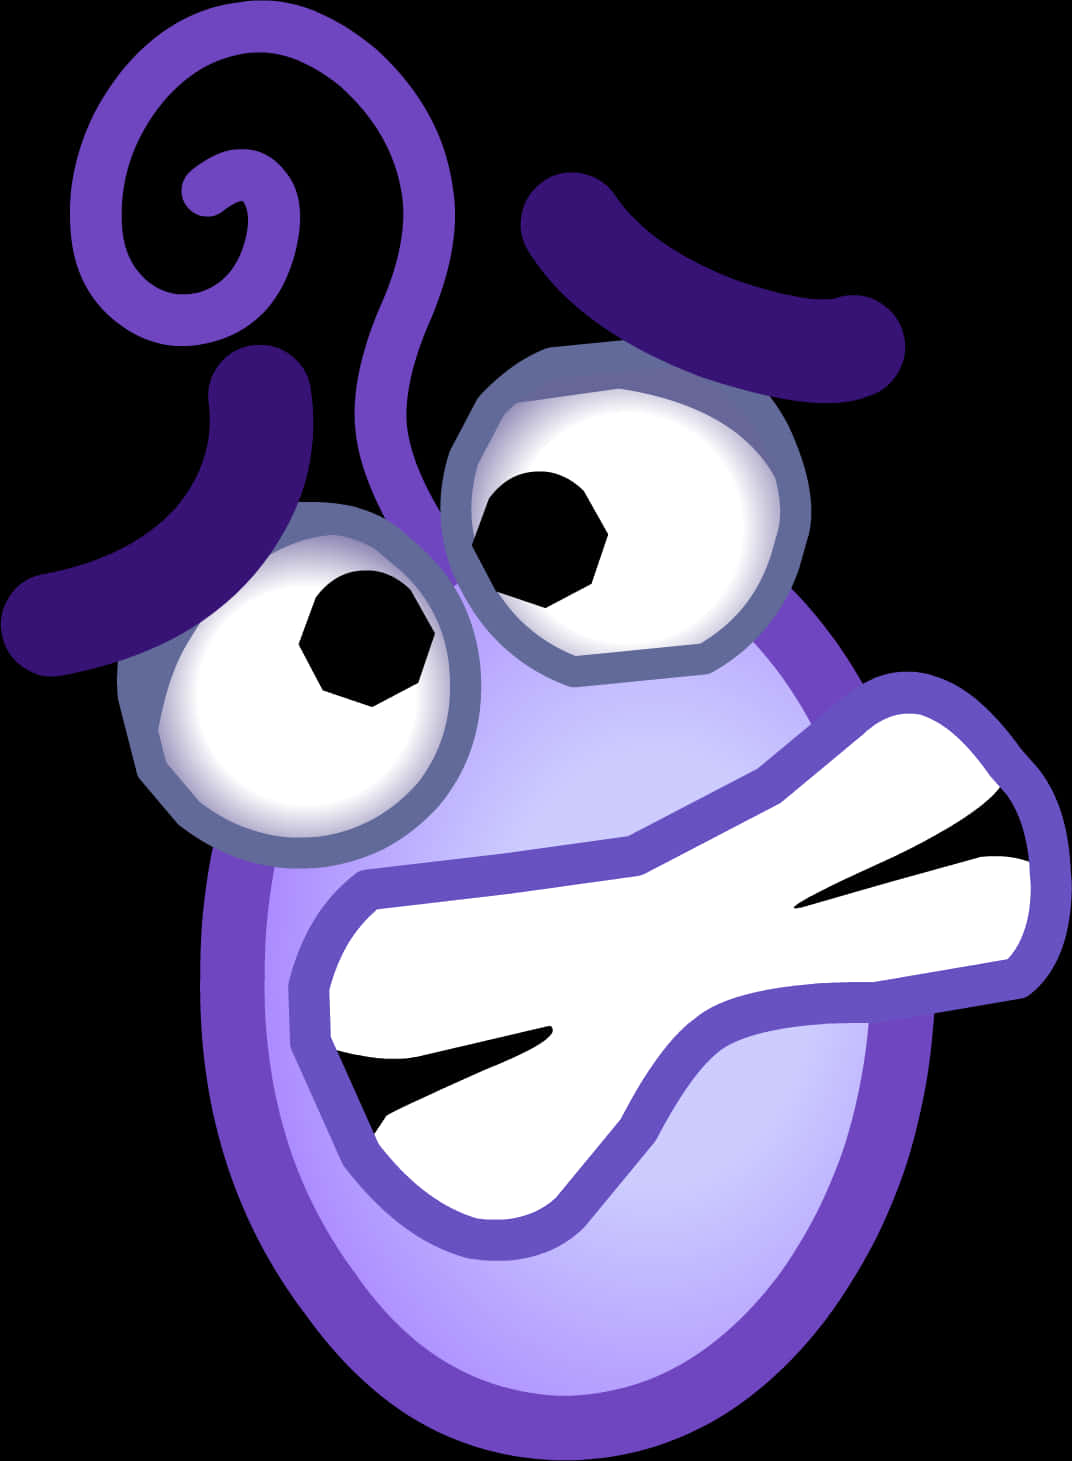 Purple Faced Cartoon Emoji Graphic PNG image